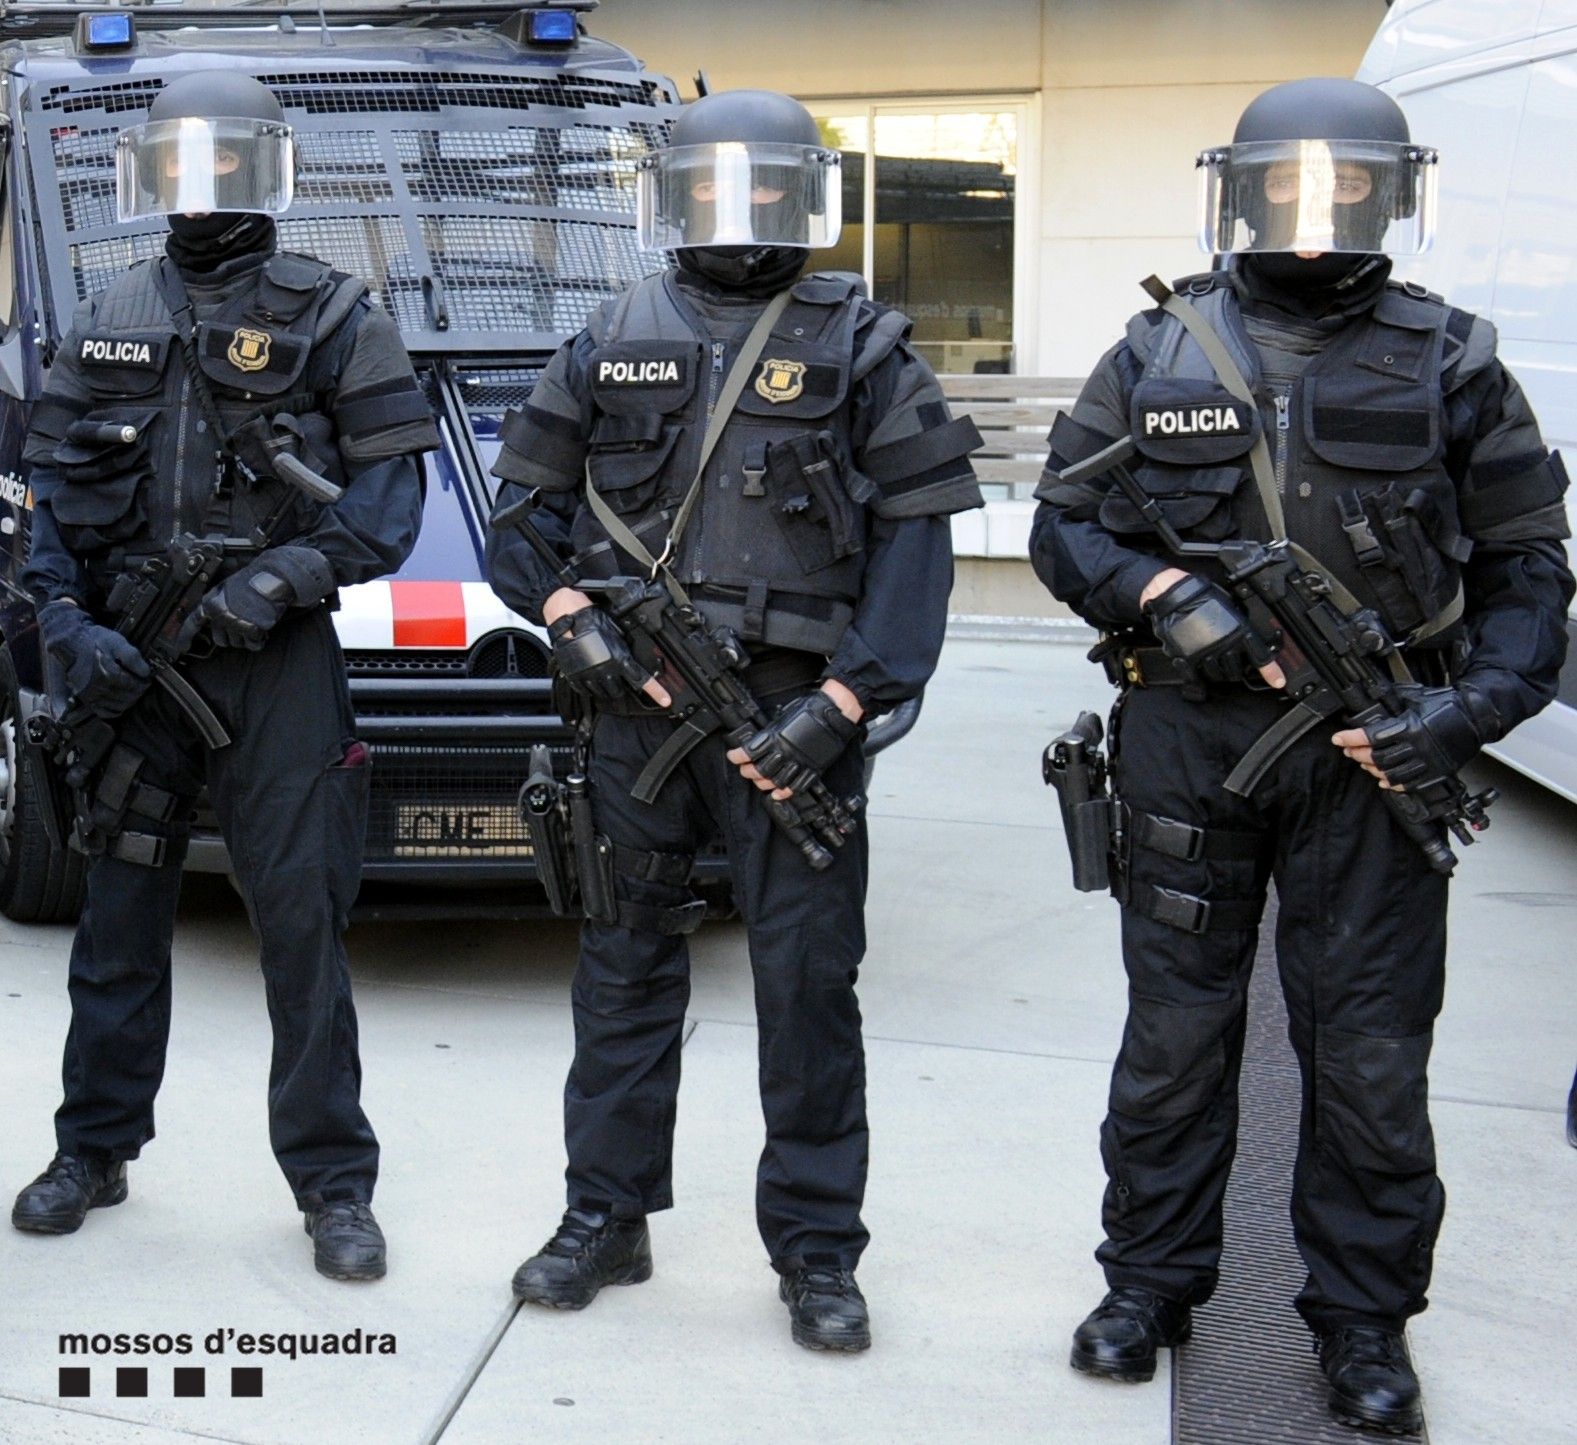 Katalońska policja - mossos d’esquadra. Fot. mossoscat / flickr.com